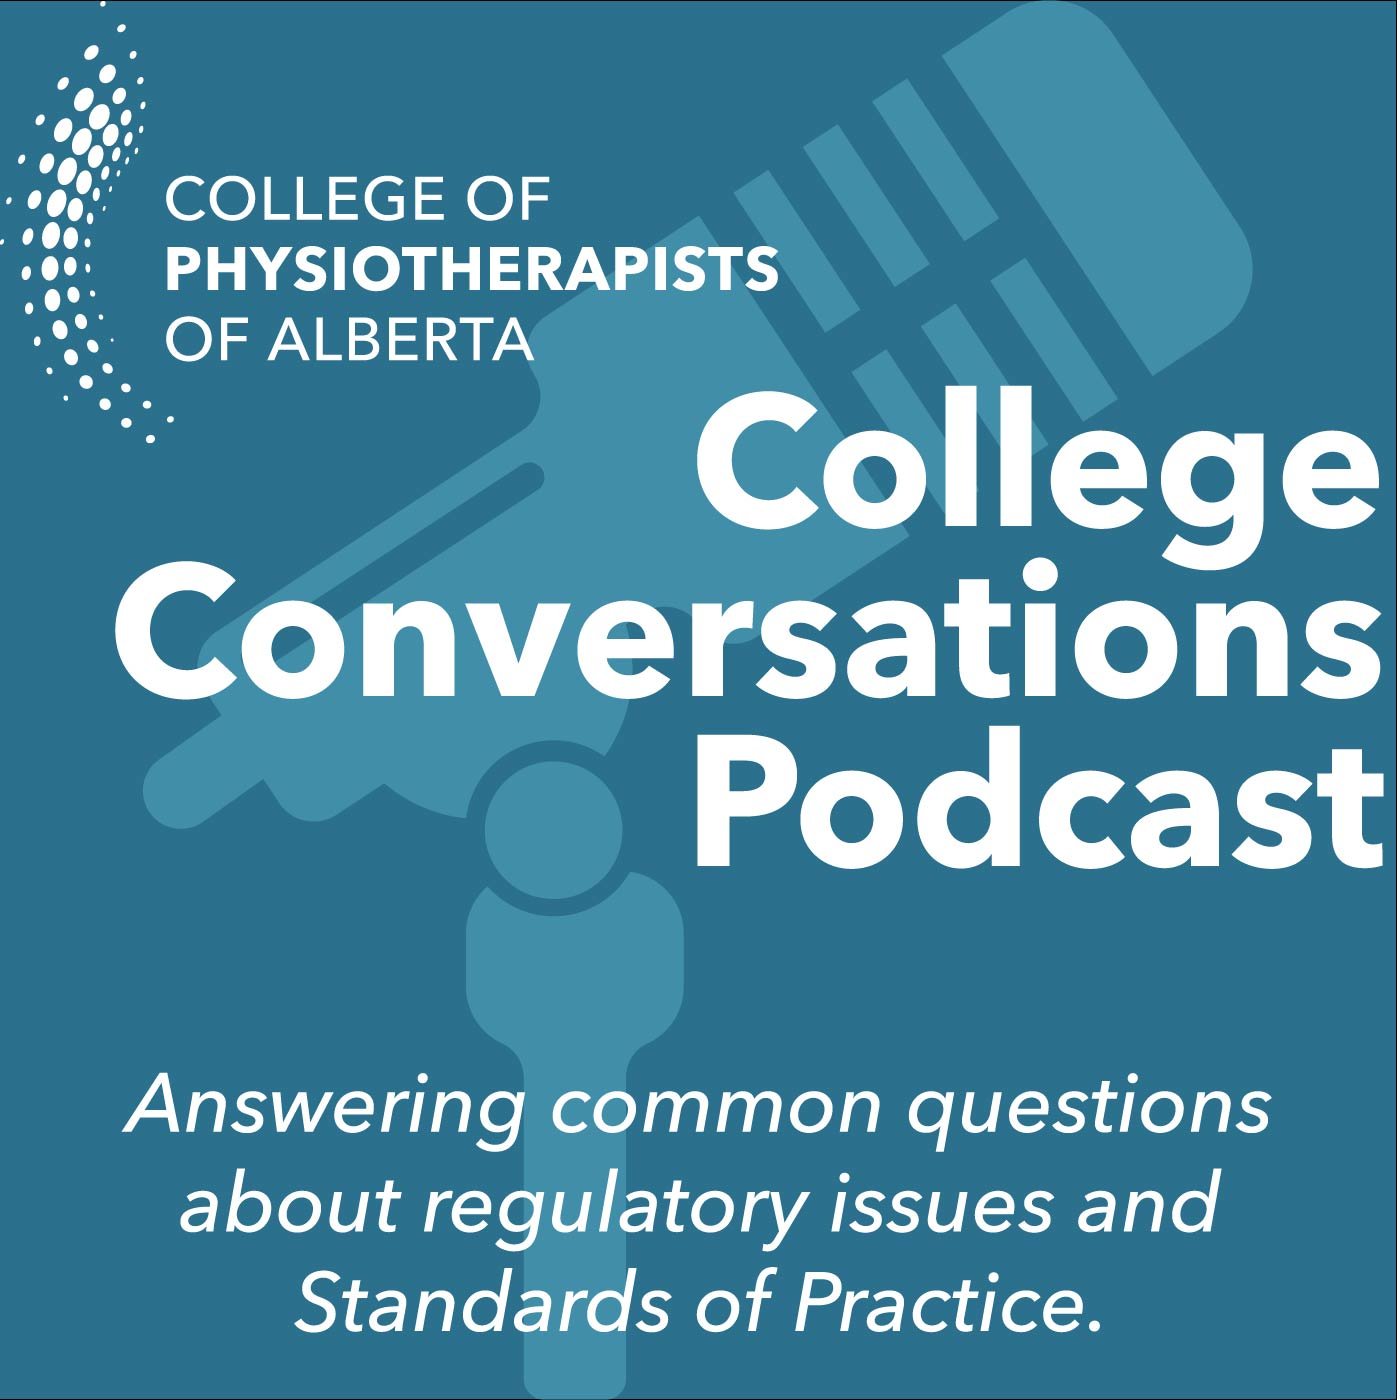 College Conversations Podcast Logo Final